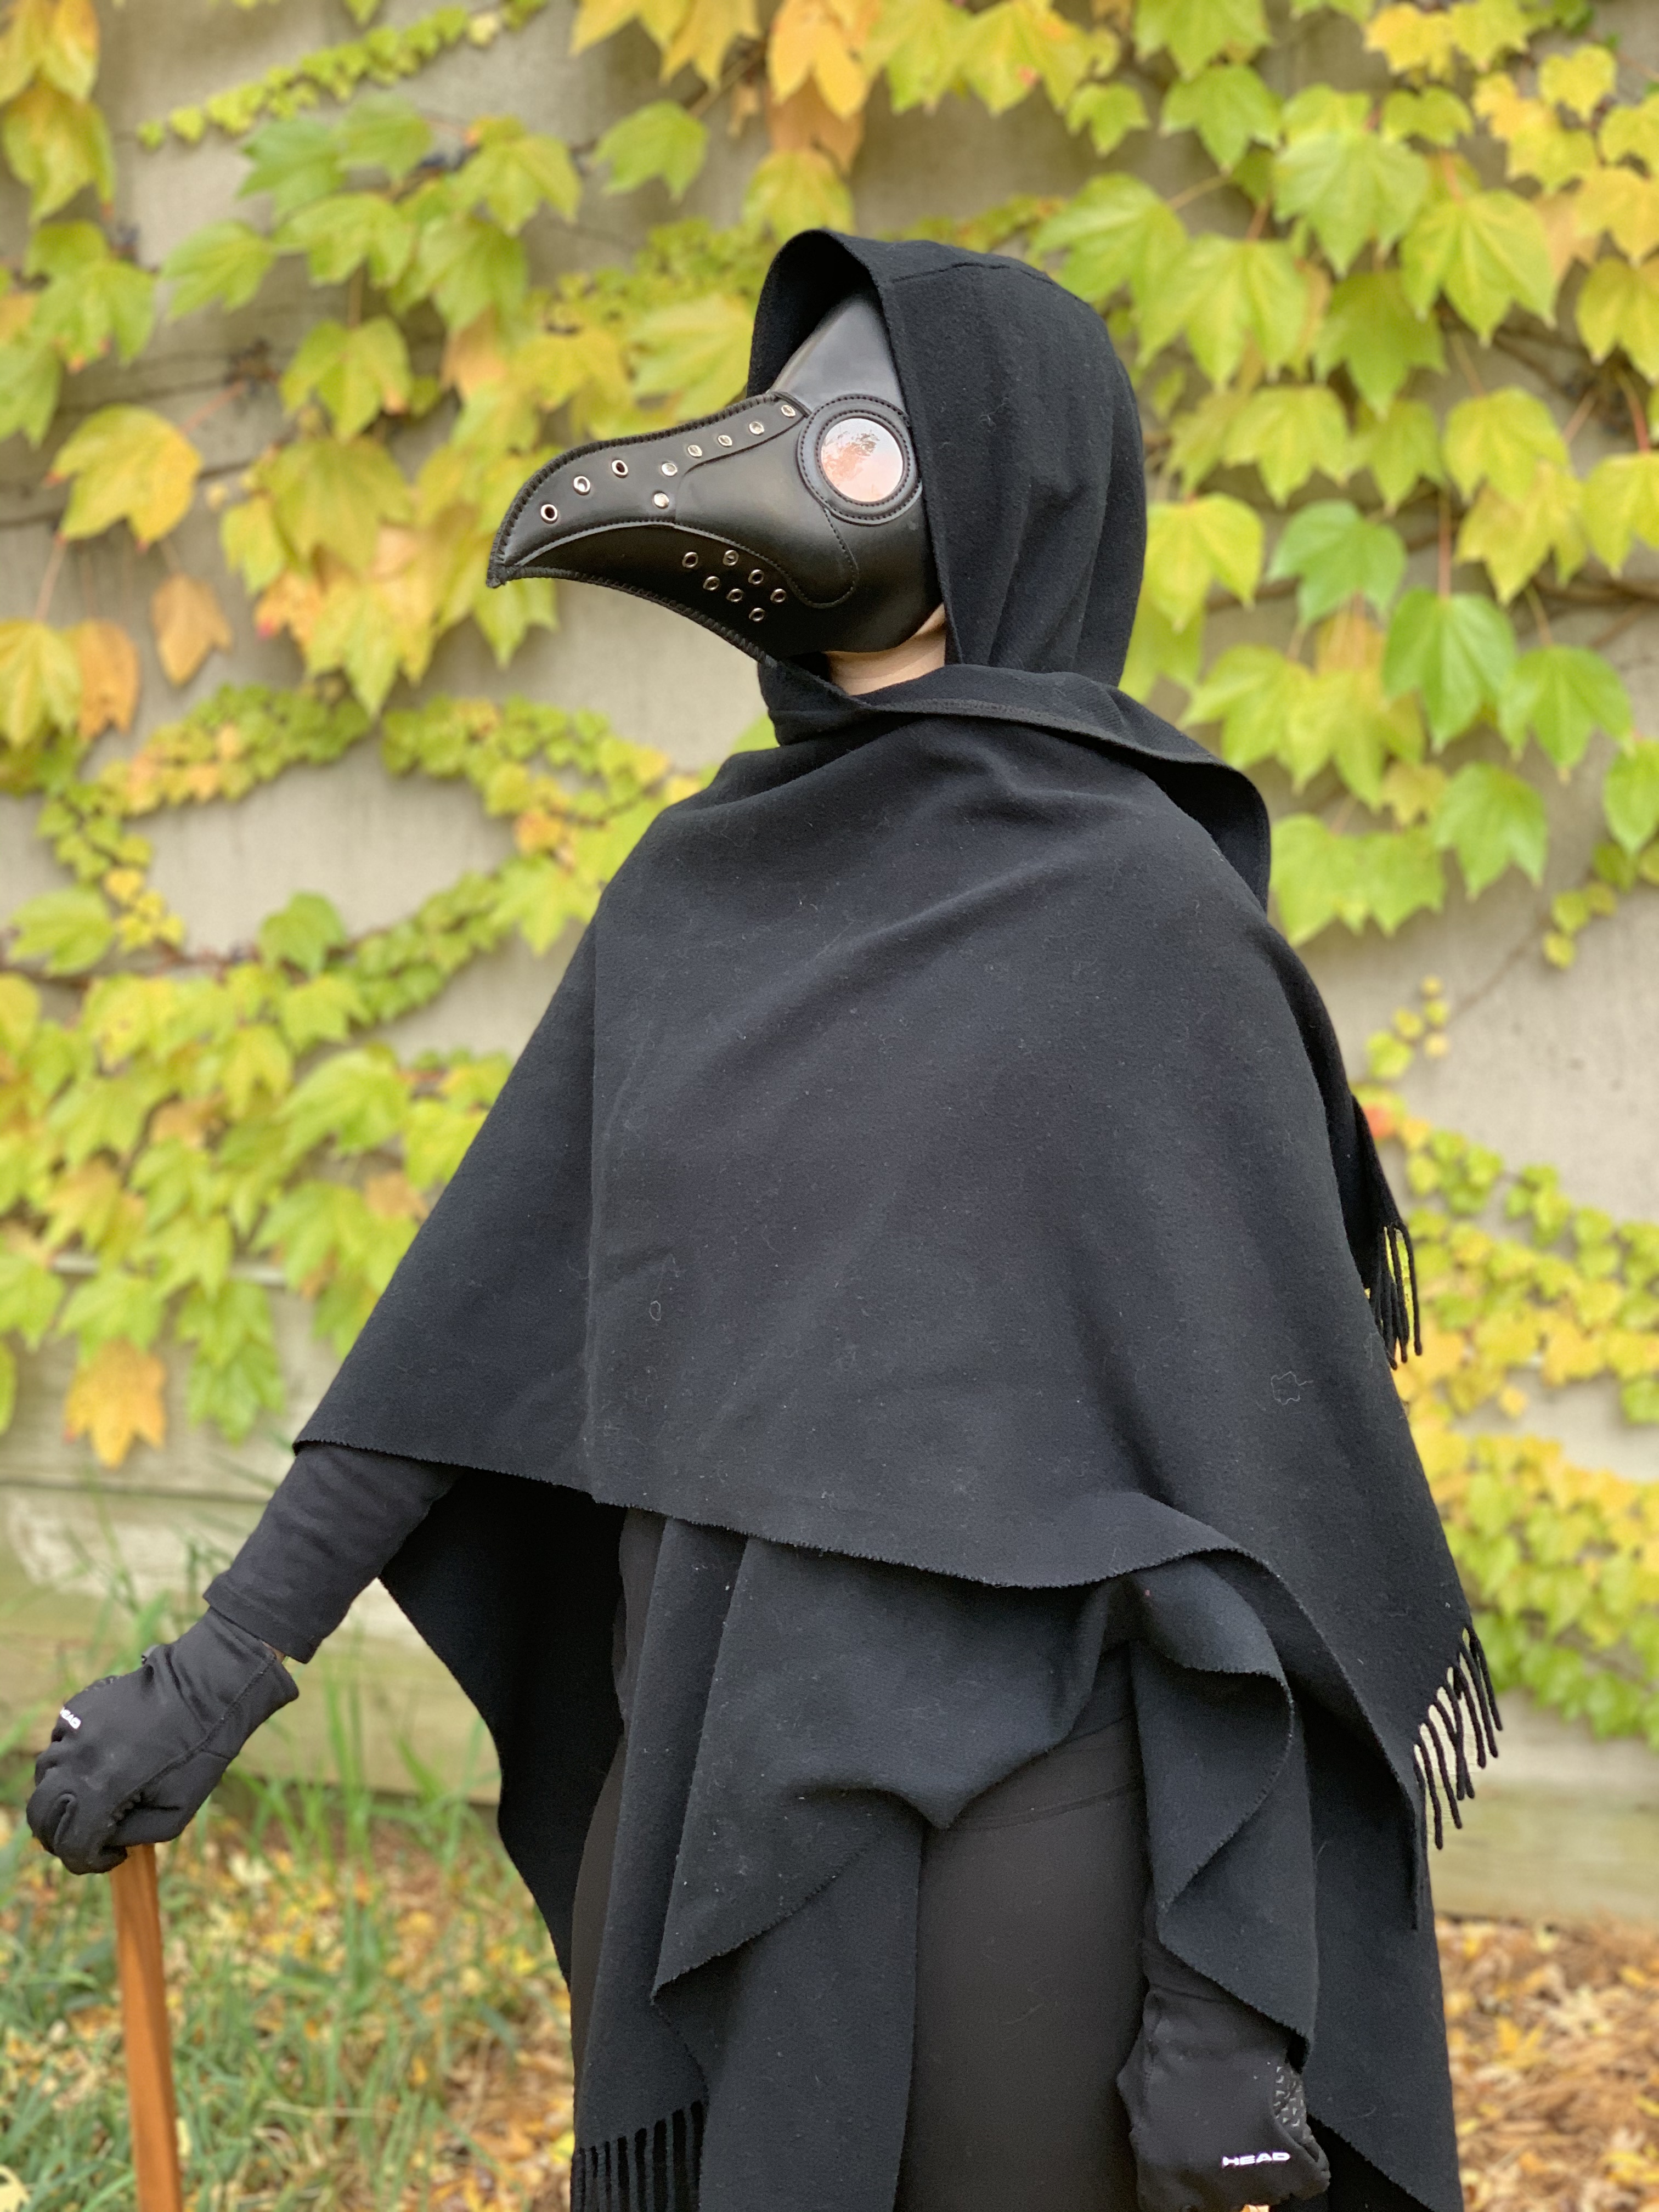 Happy Halloween from the Plague Doctor – Gina Buonaguro